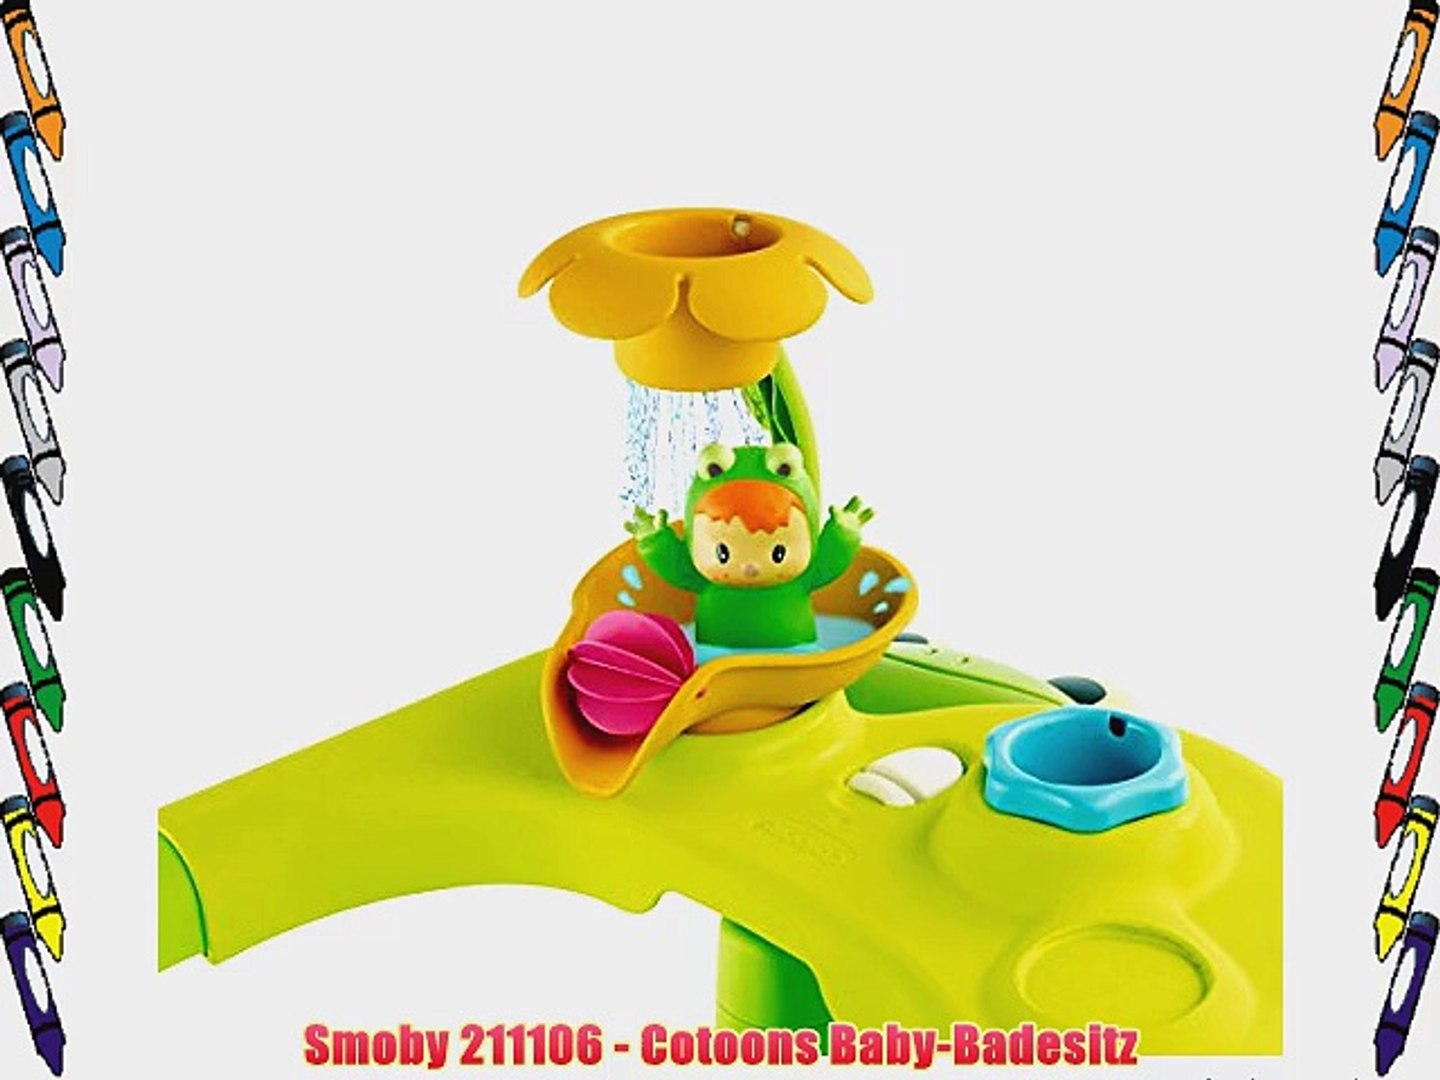 Smoby 211106 - Cotoons Baby-Badesitz - video Dailymotion